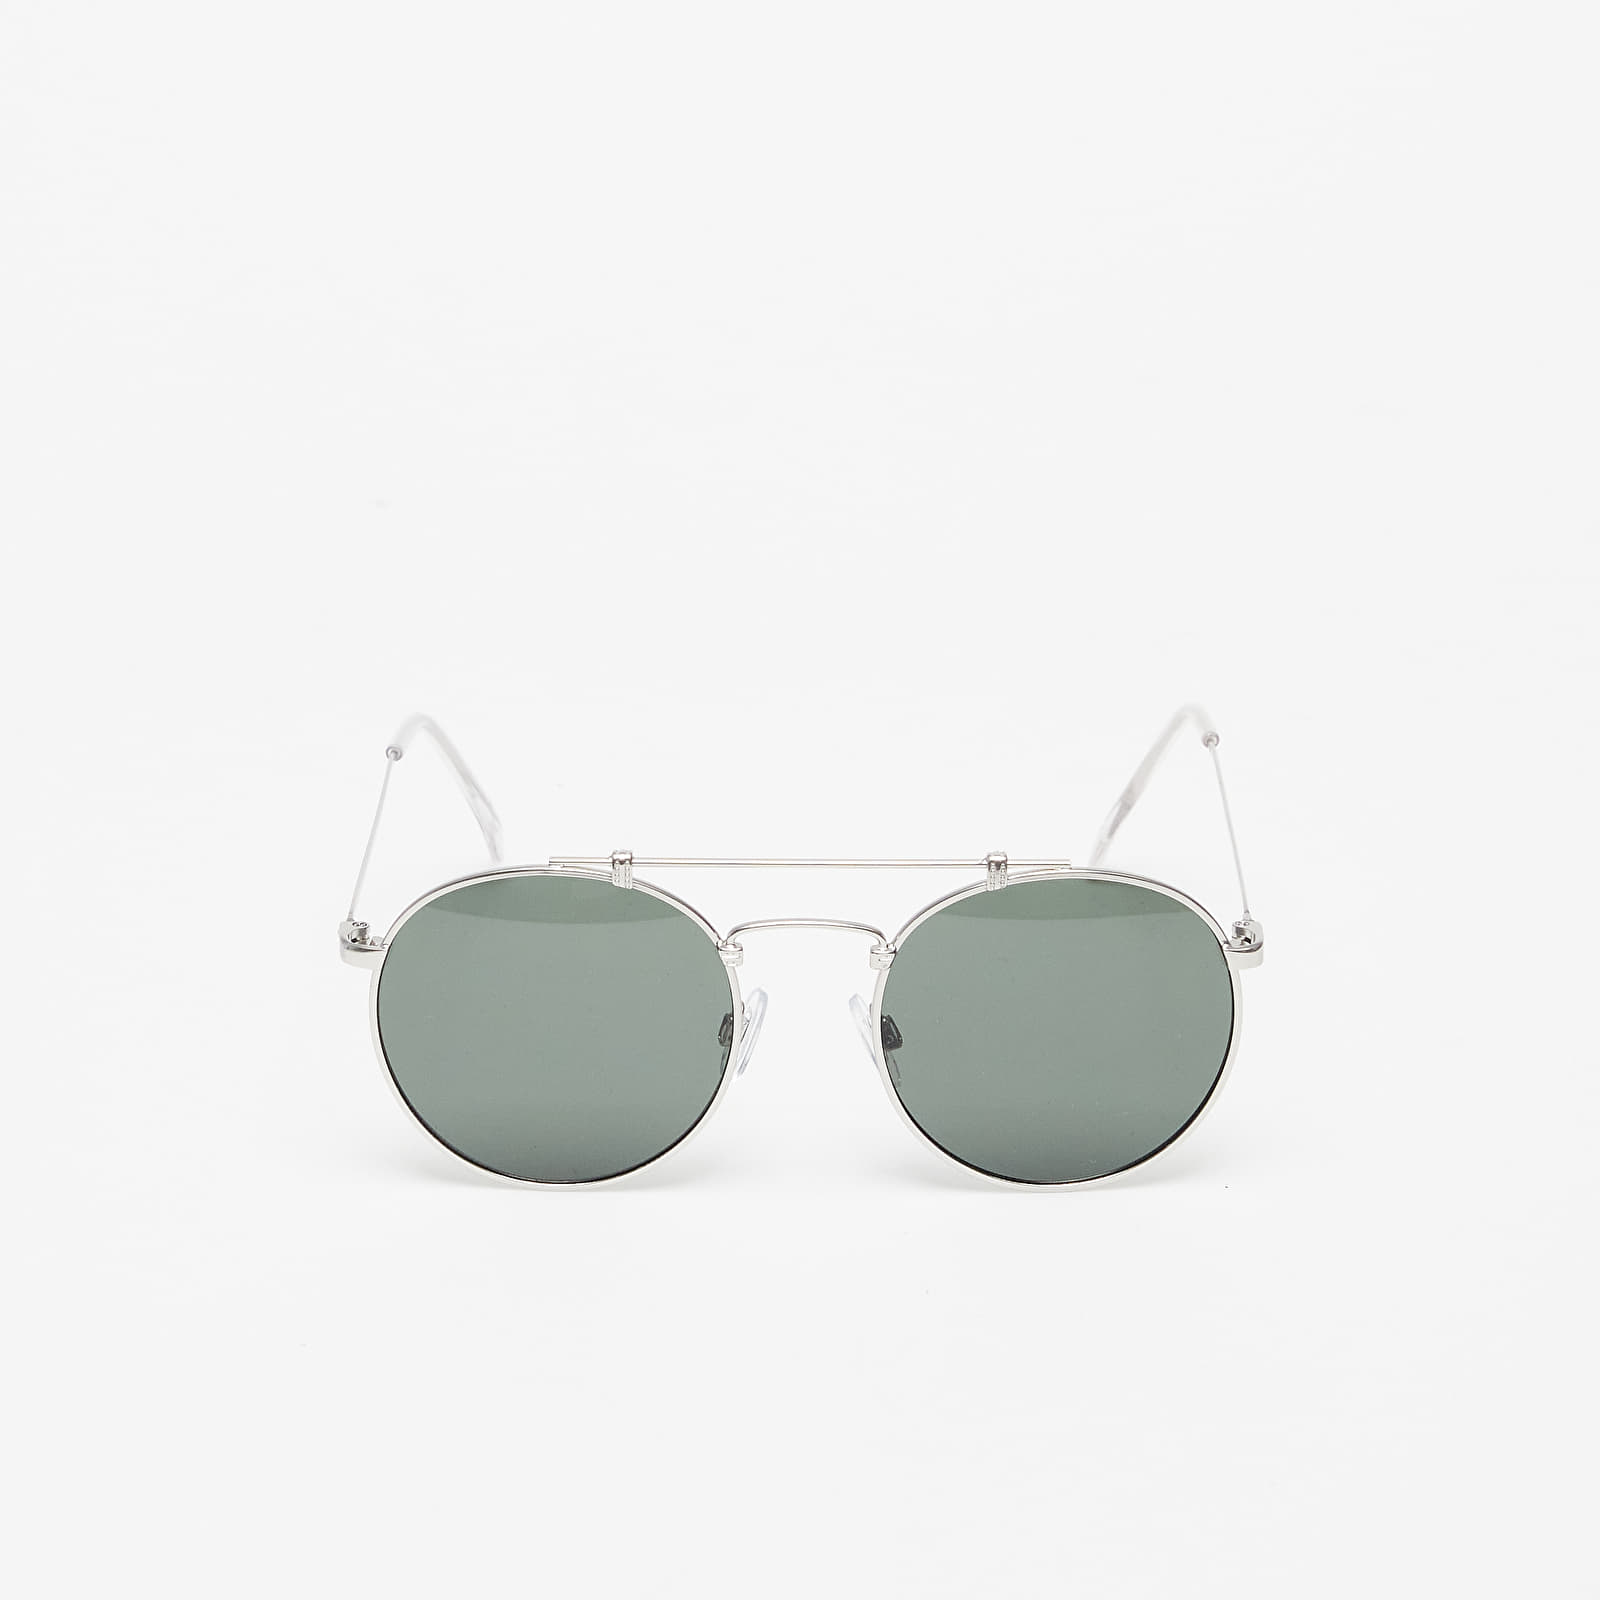 Sunglasses Vans Henderson Shades Silver